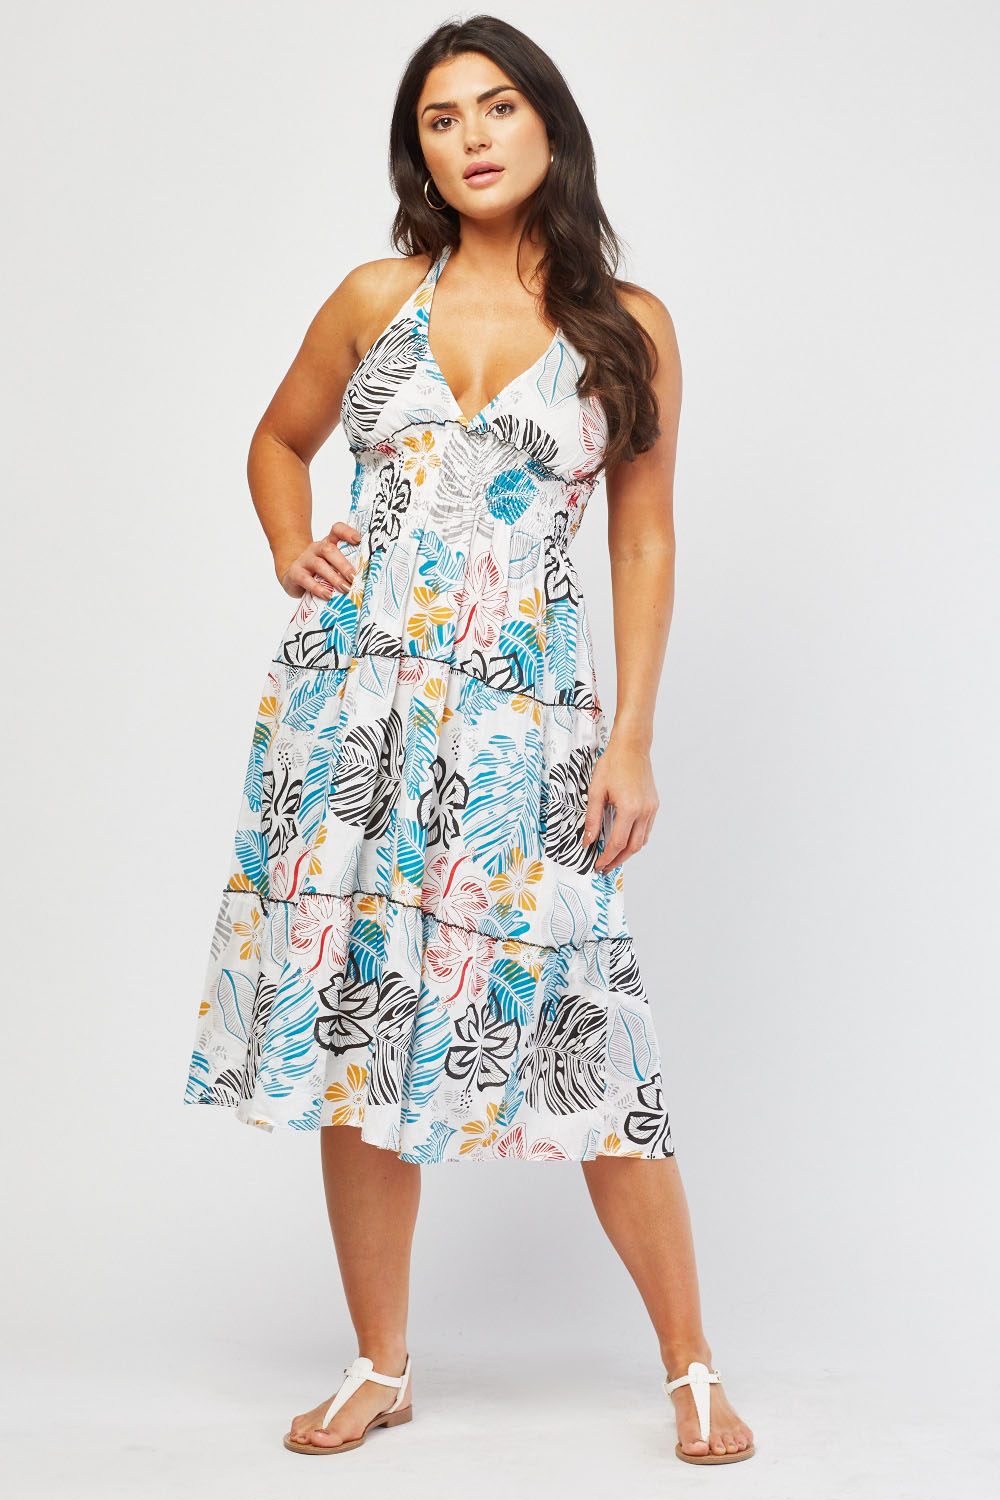 Printed Halter-Neck Sun Dress - Teal/Multi or Blue/Multi - Just £5